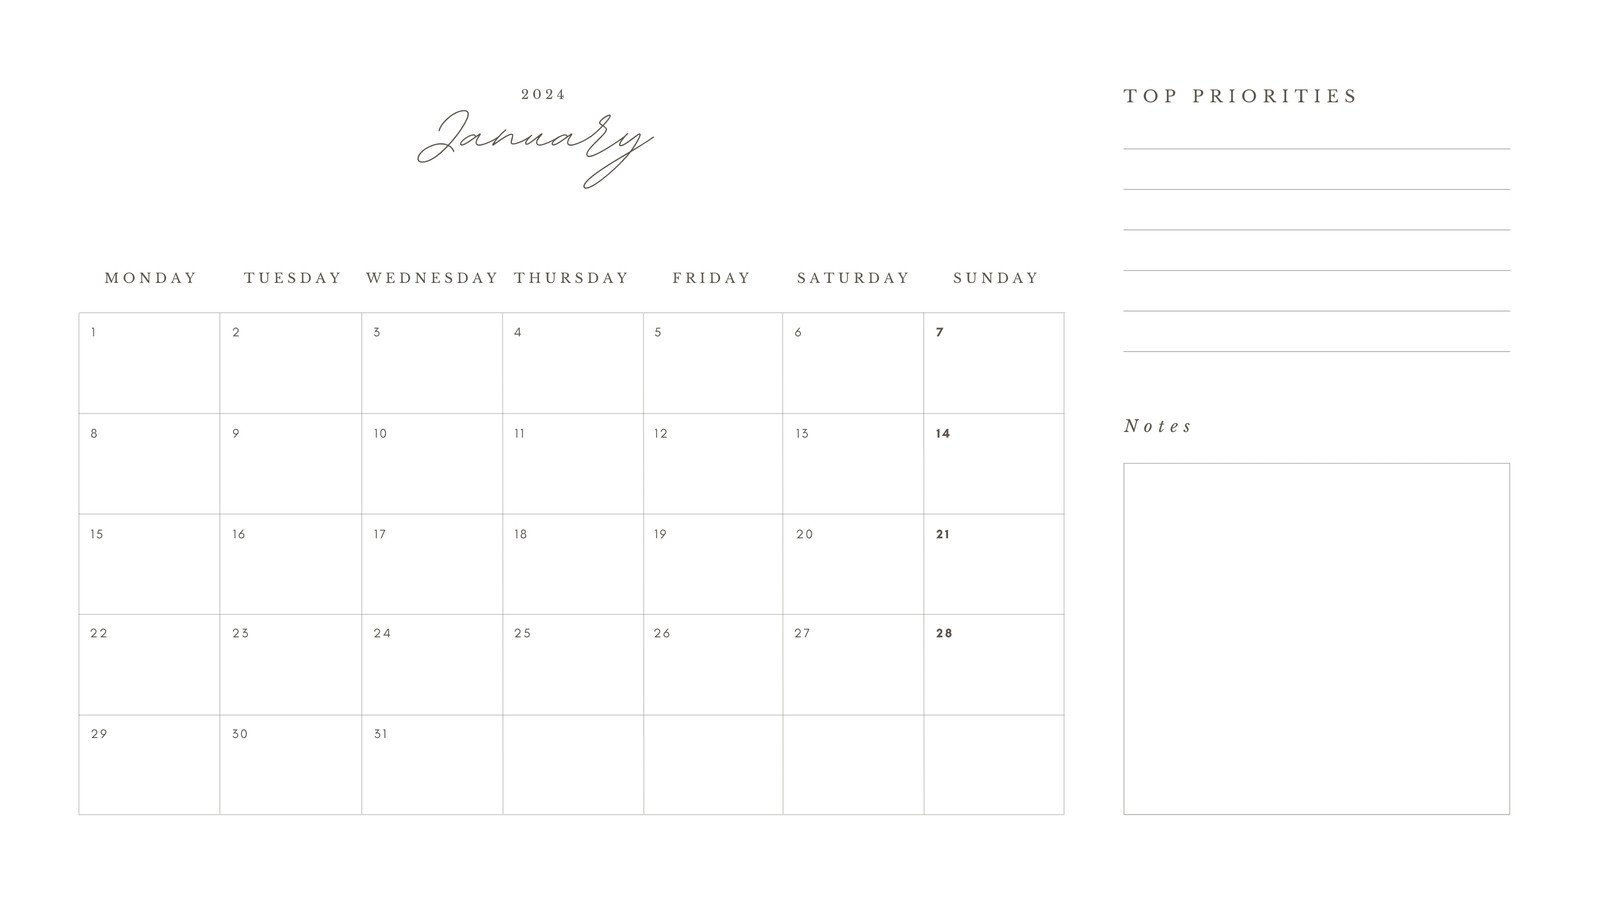 https://marketplace.canva.com/EAF0uHUbC0w/1/0/1600w/canva-white-minimalist-elegant-2024-calendar-bx89YlfEpVw.jpg